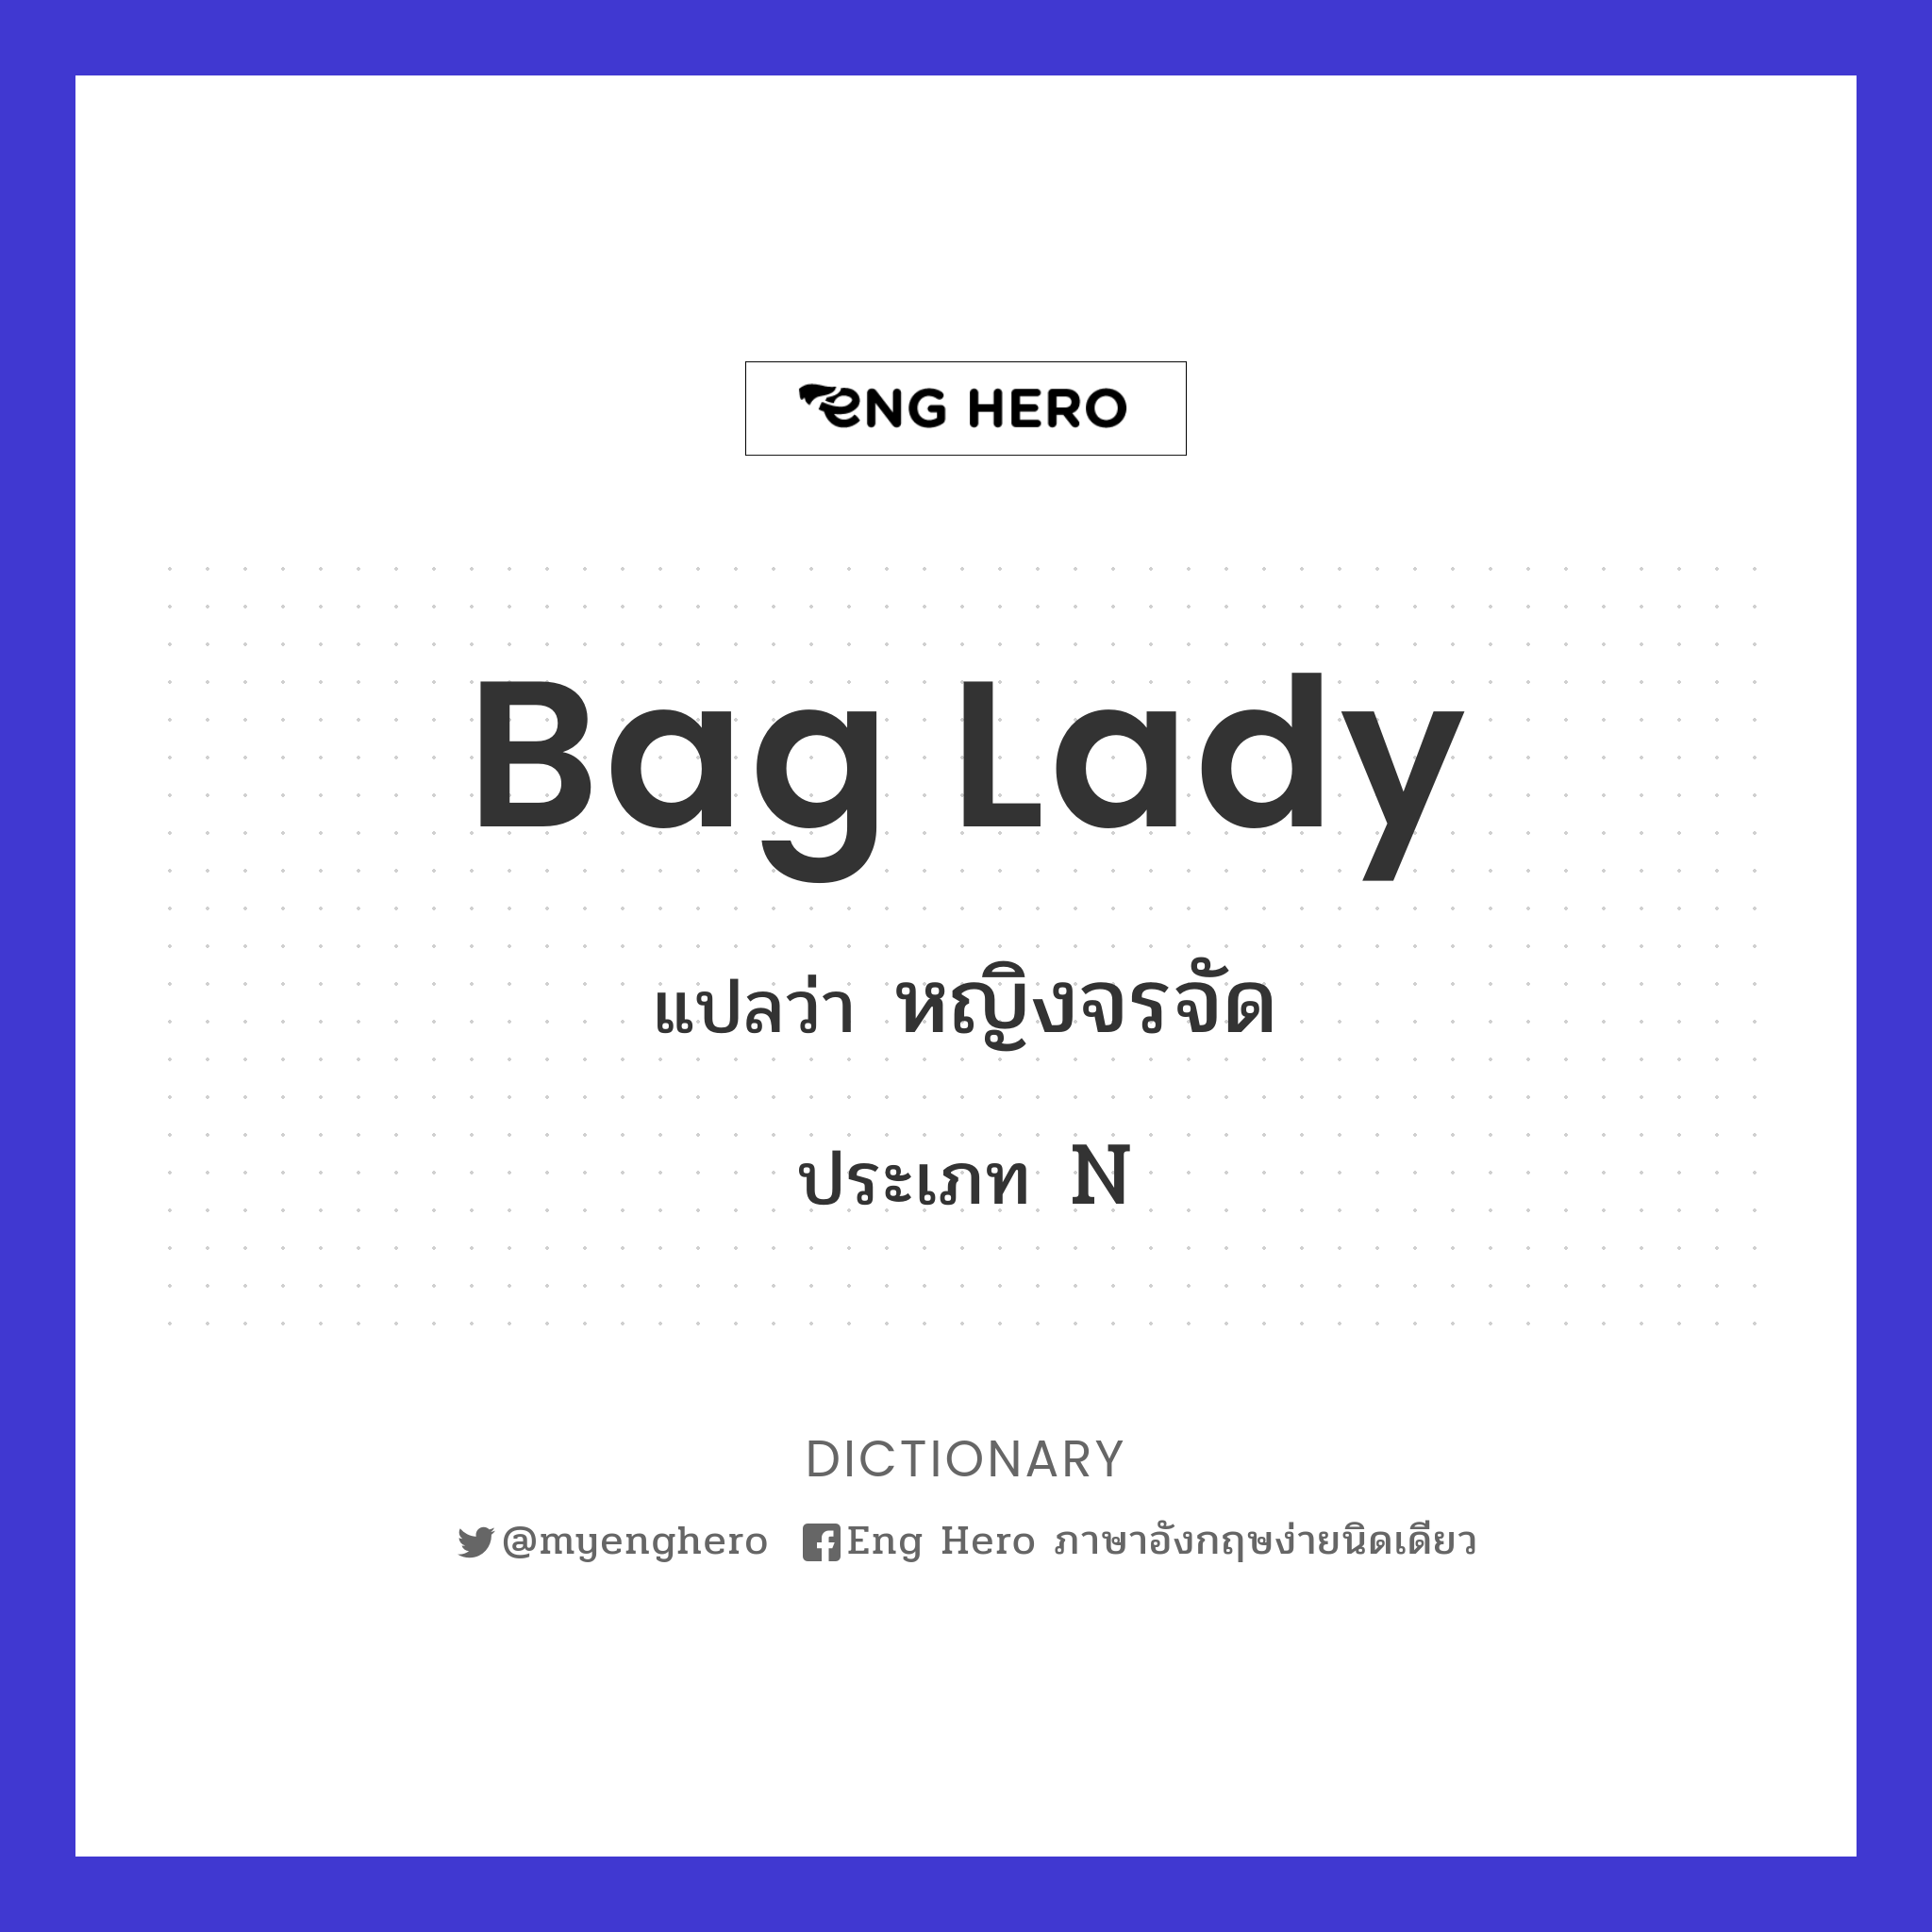 bag lady